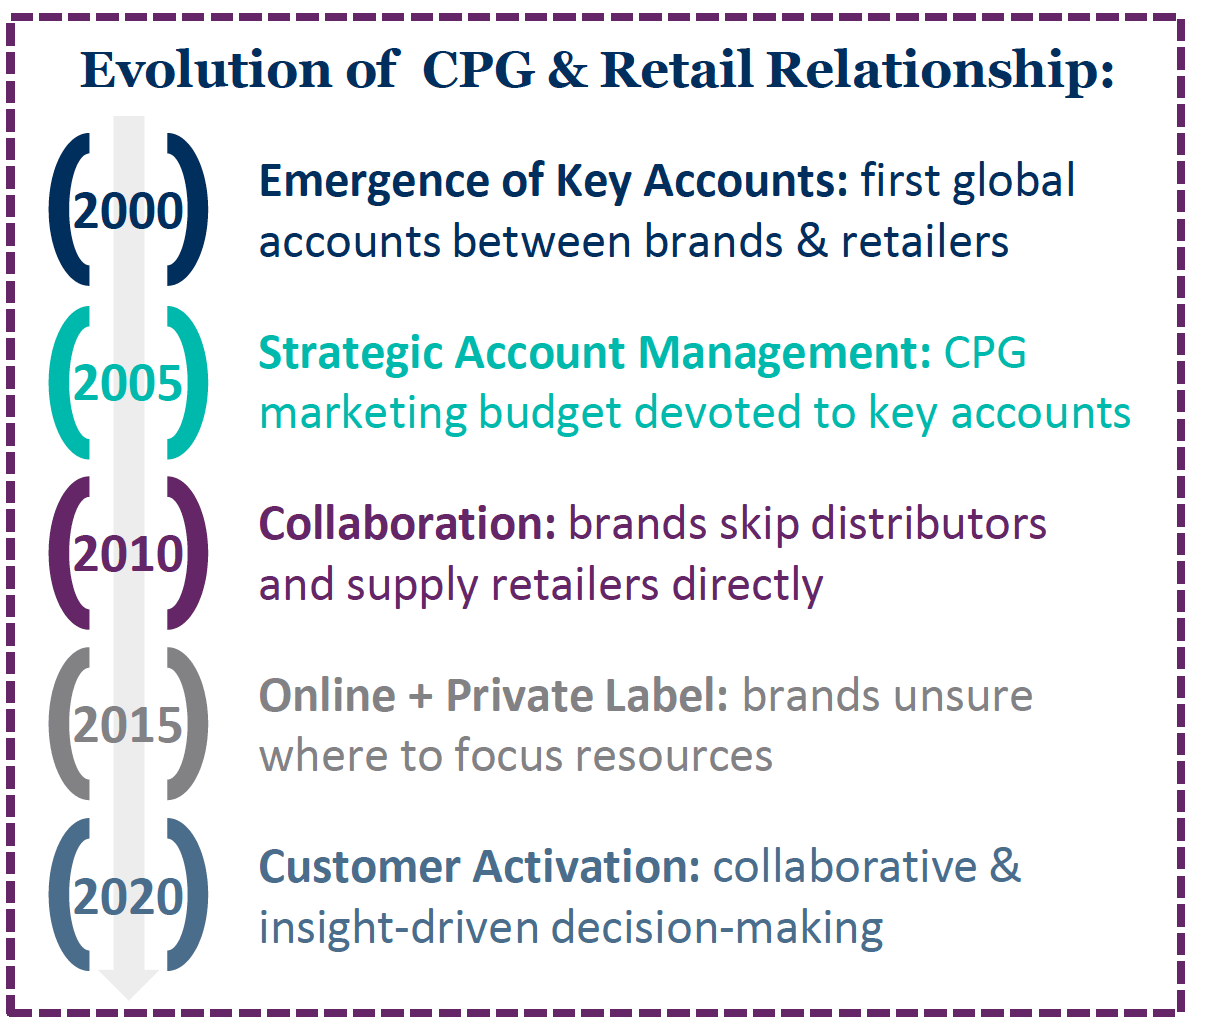 rra-cpg-organizations-seek-consumer-centricity-in-2020